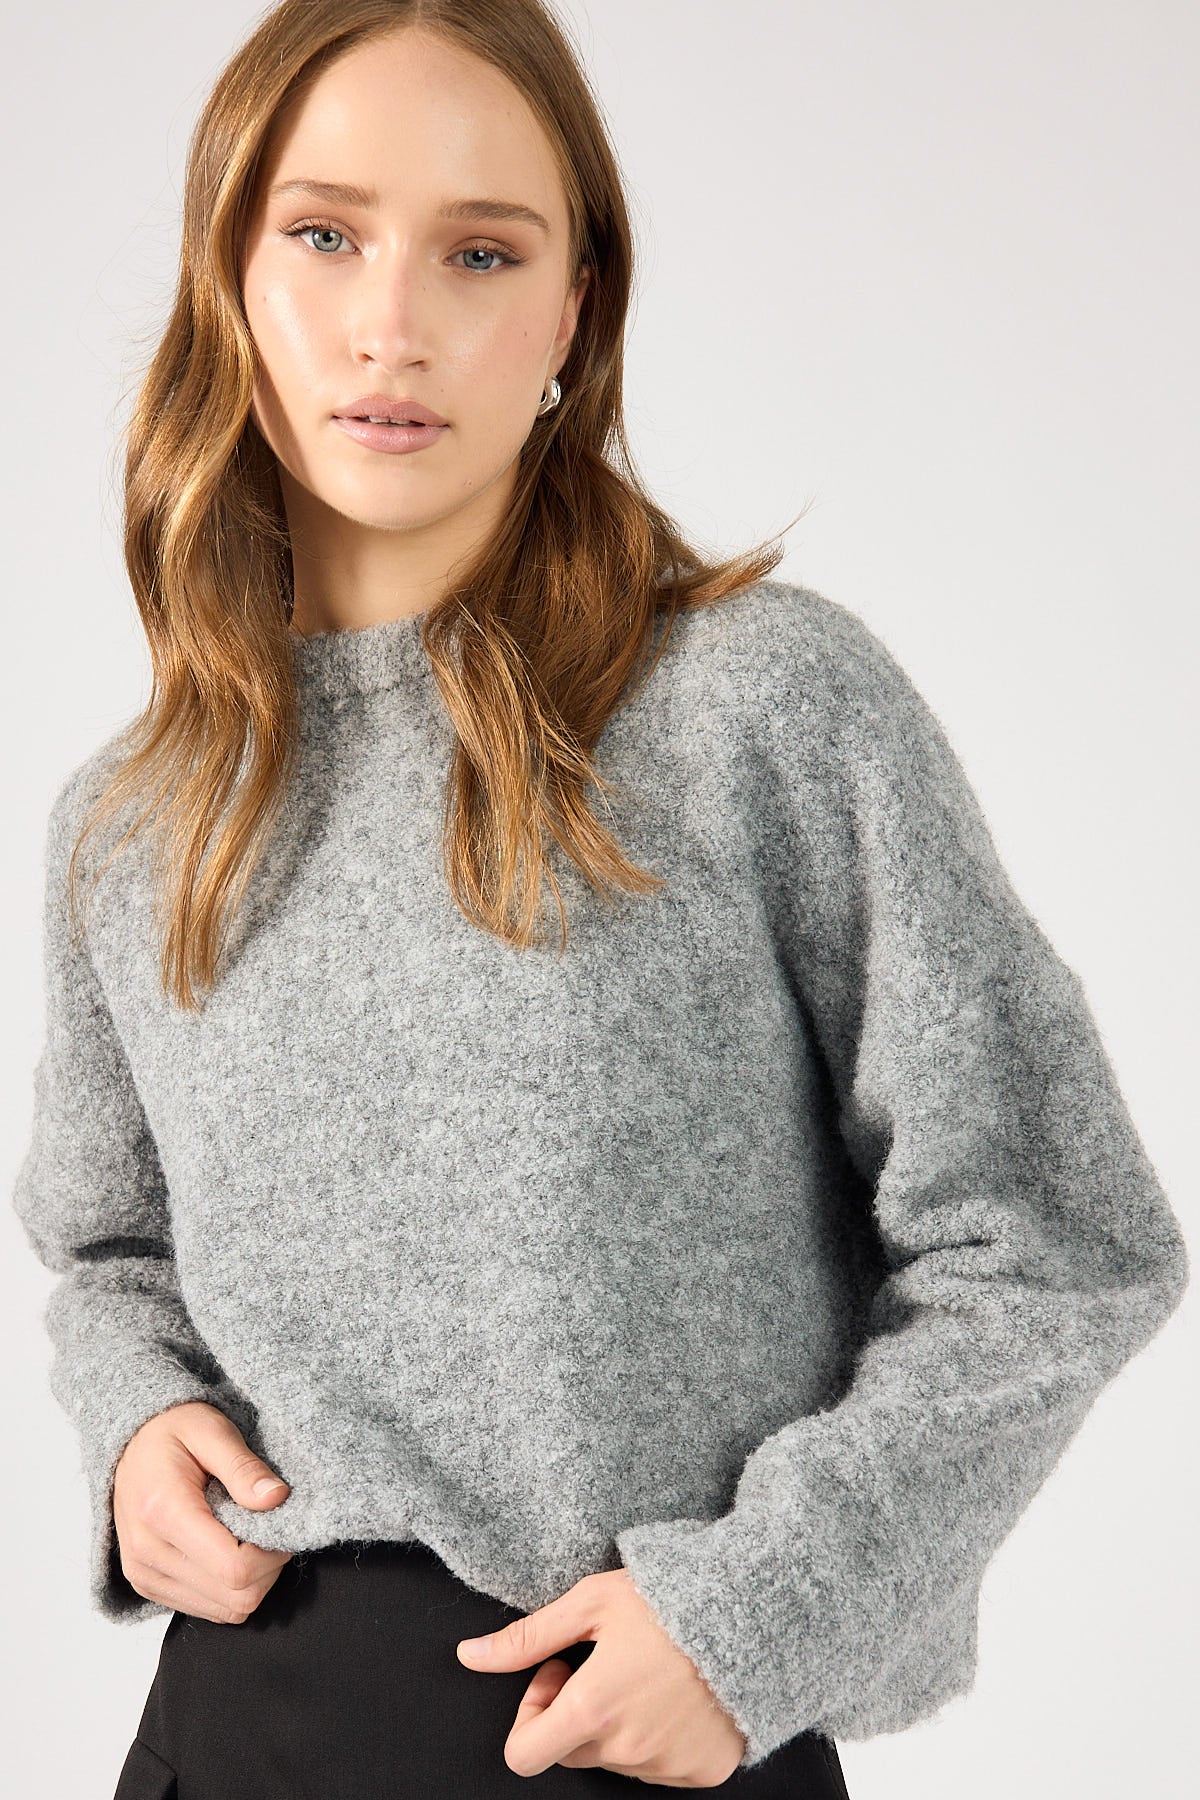 Perfect Stranger Aspen Boucle Basic Sweater Grey